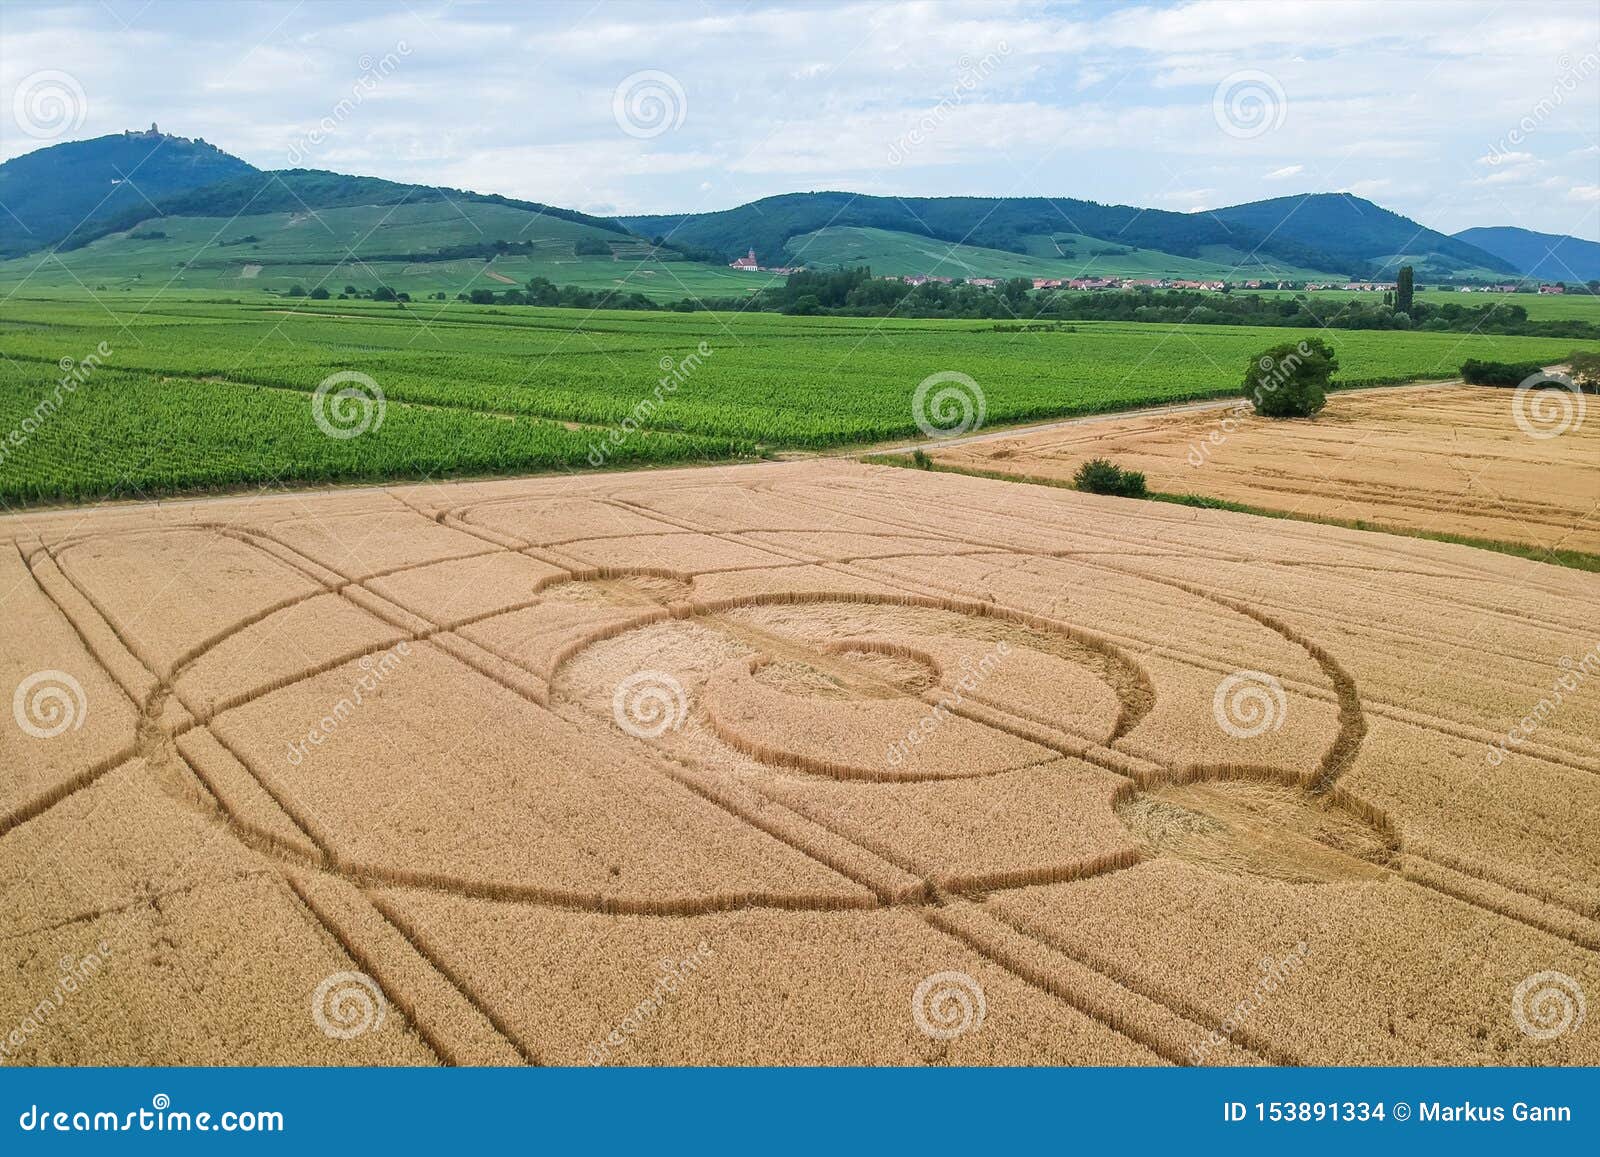 crop circles field alsace france